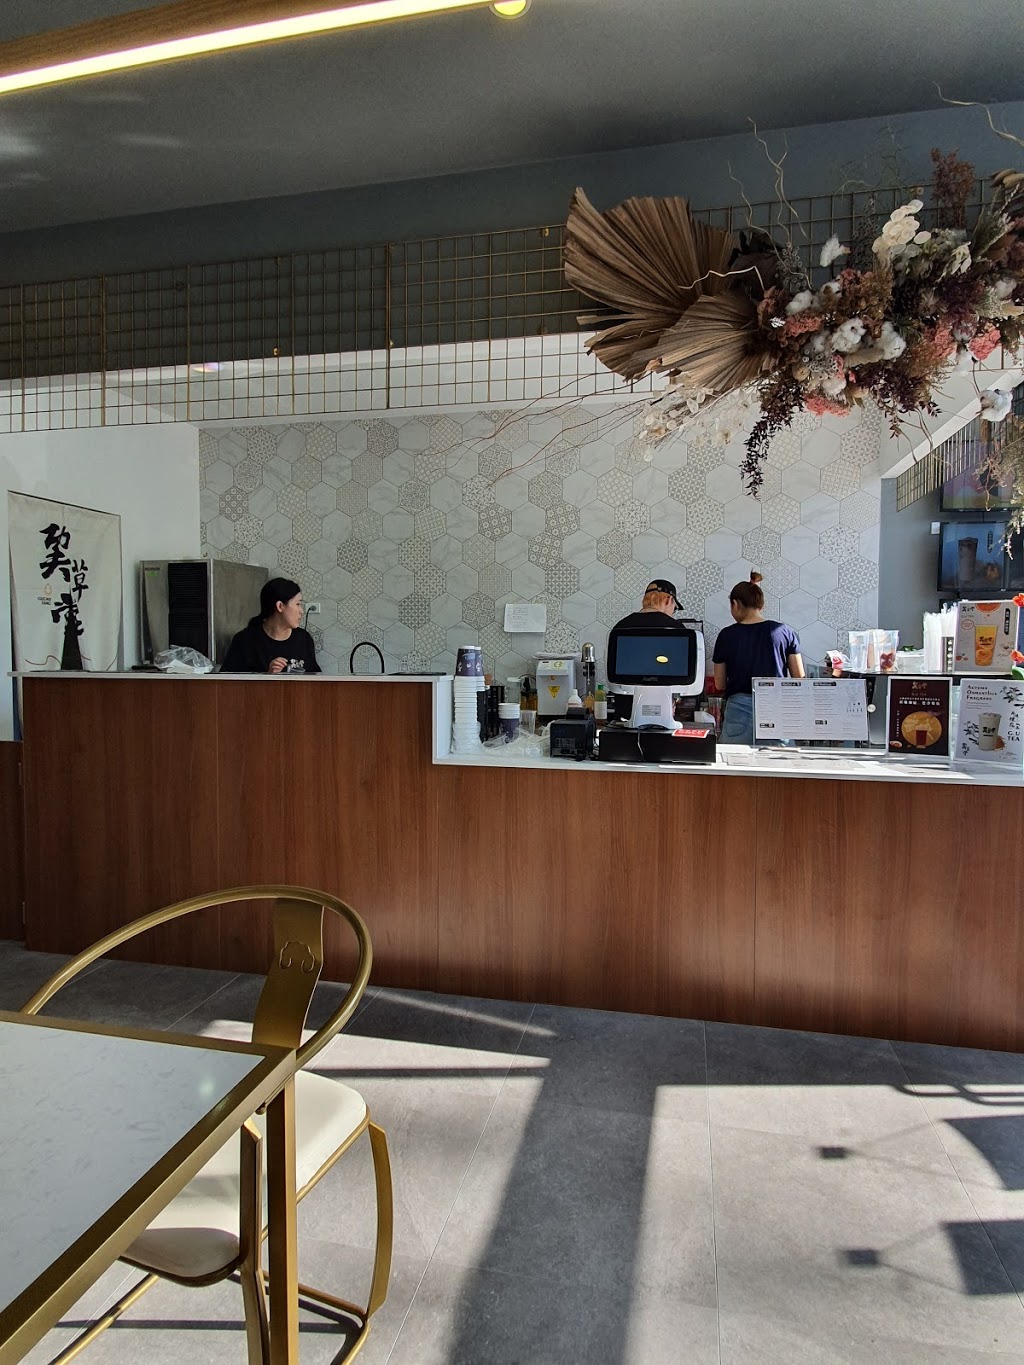 G.U Tea | cafe | 22 Gowan Rd, Sunnybank Hills QLD 4109, Australia